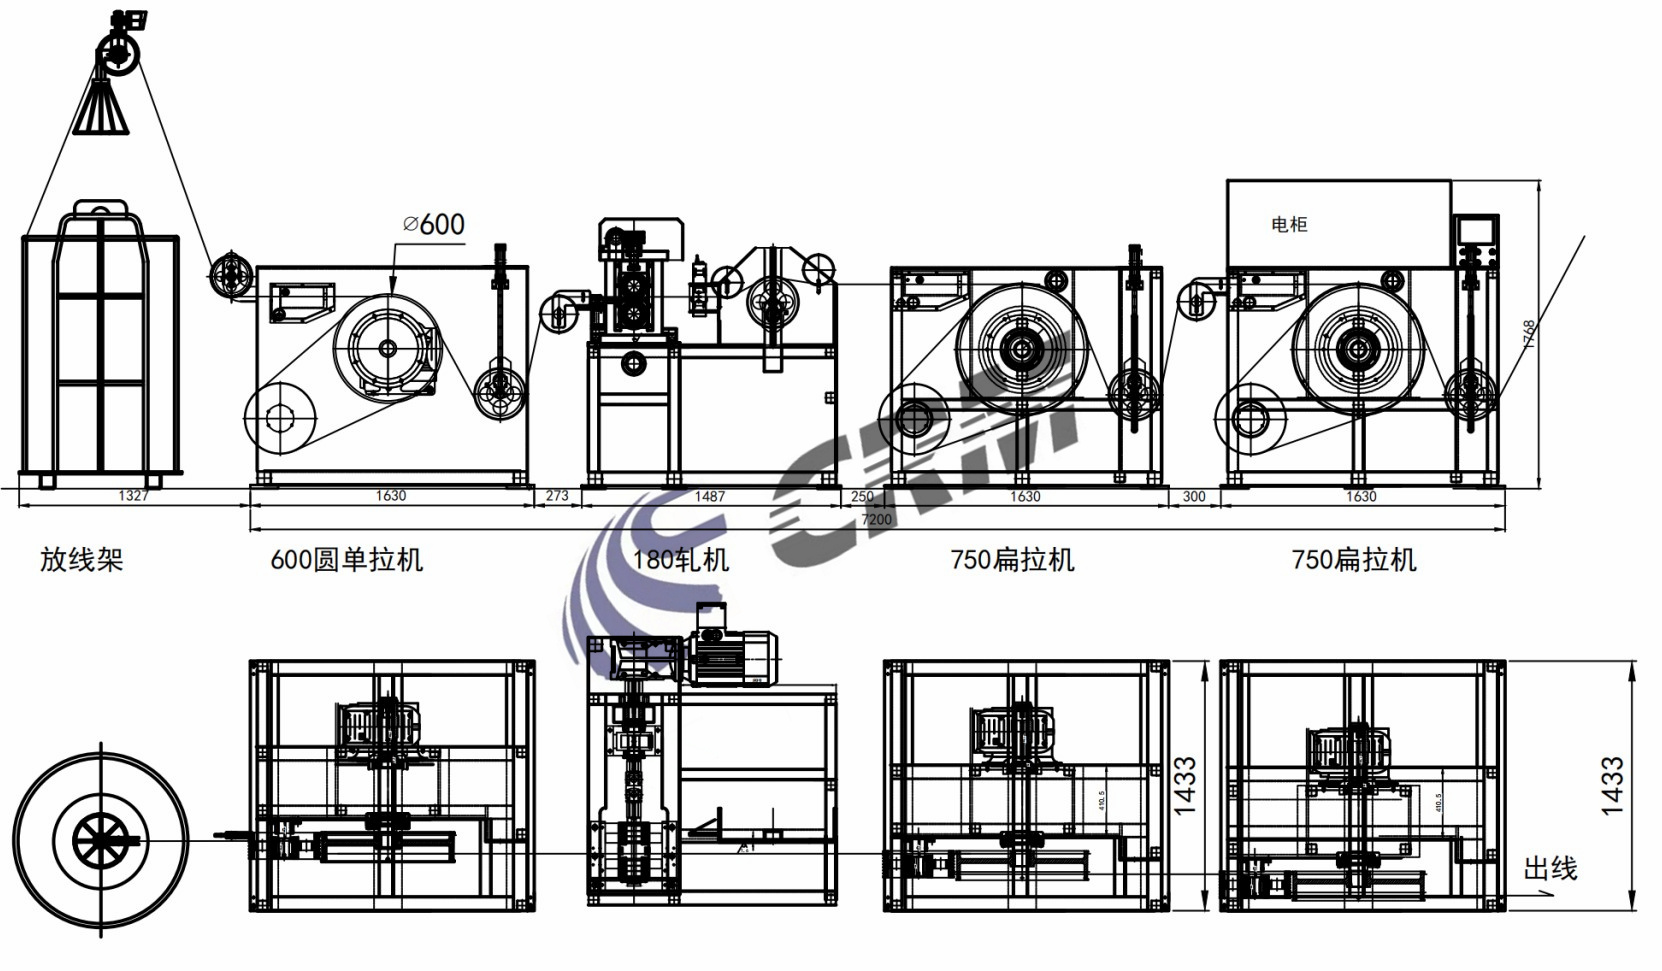 drawings for rolling mills.jpg